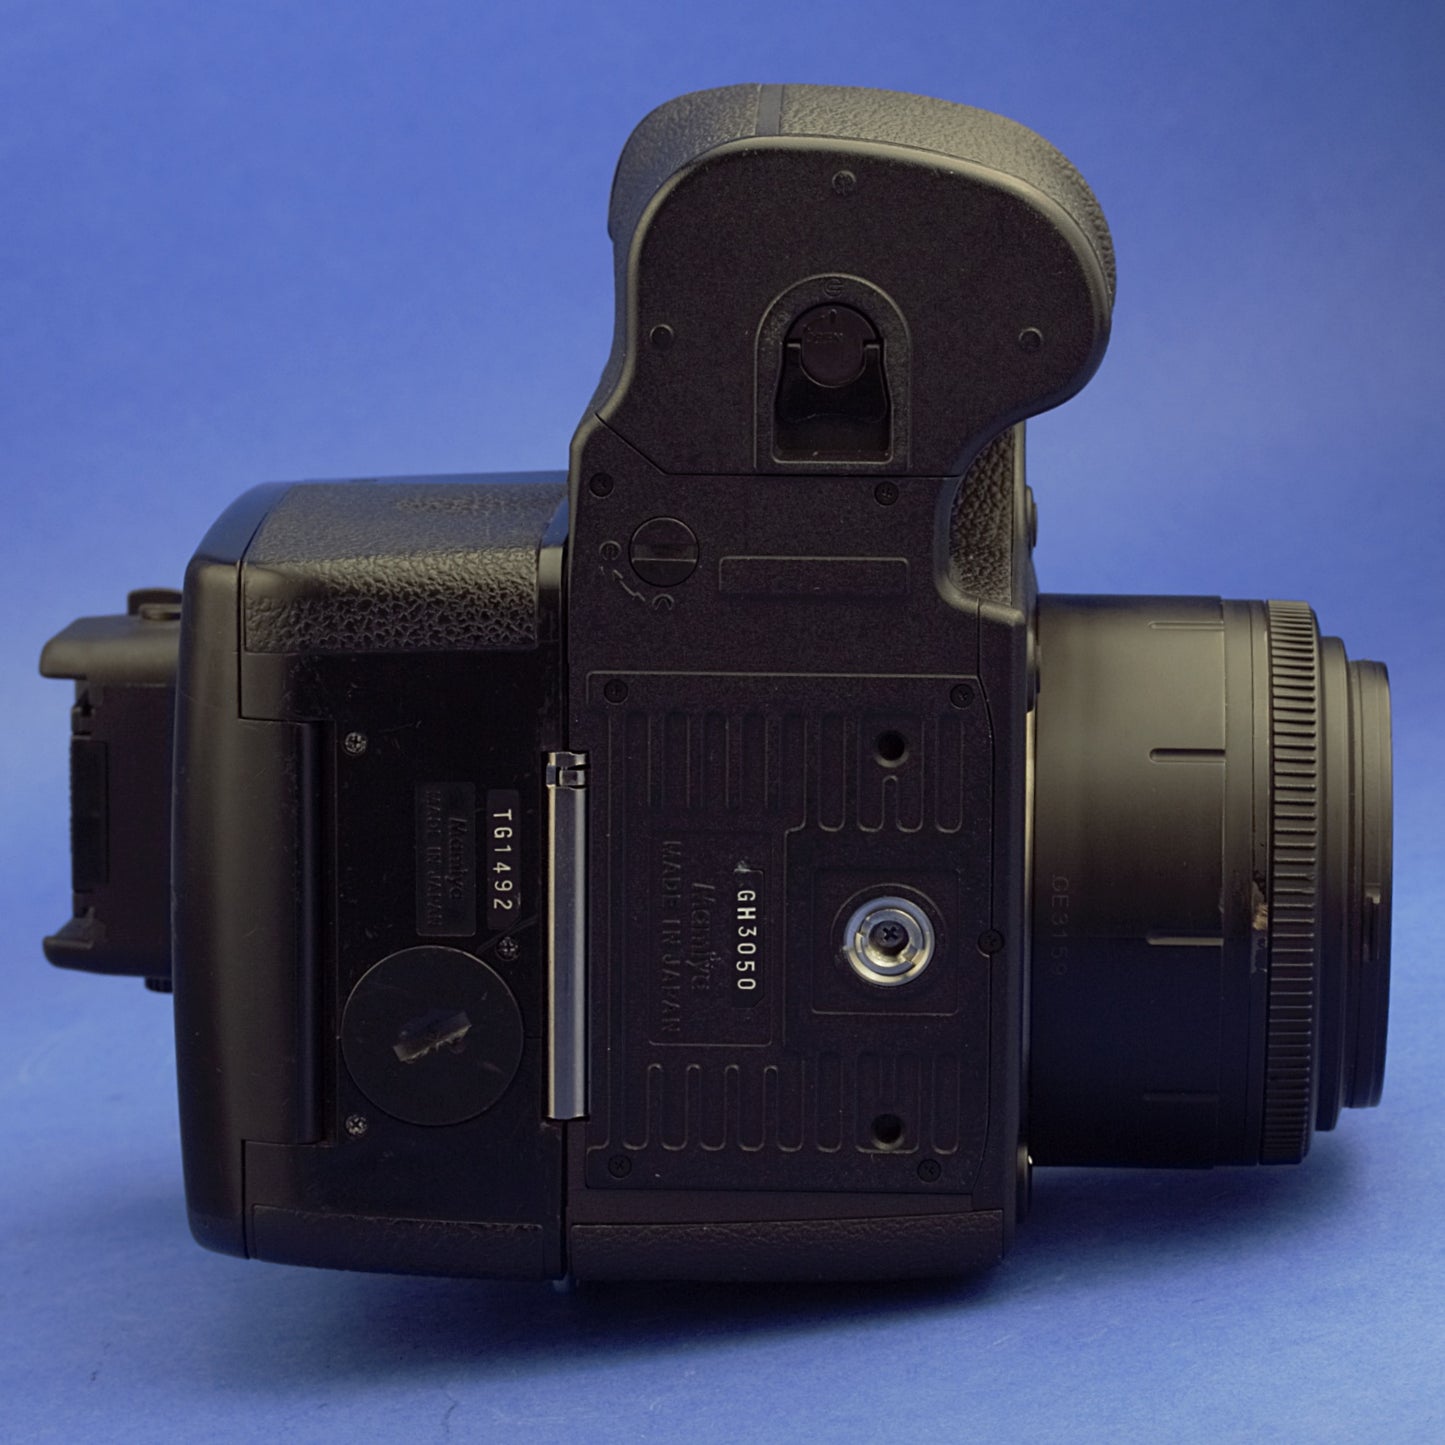 Mamiya 645 AFD II Medium Format Camera Kit